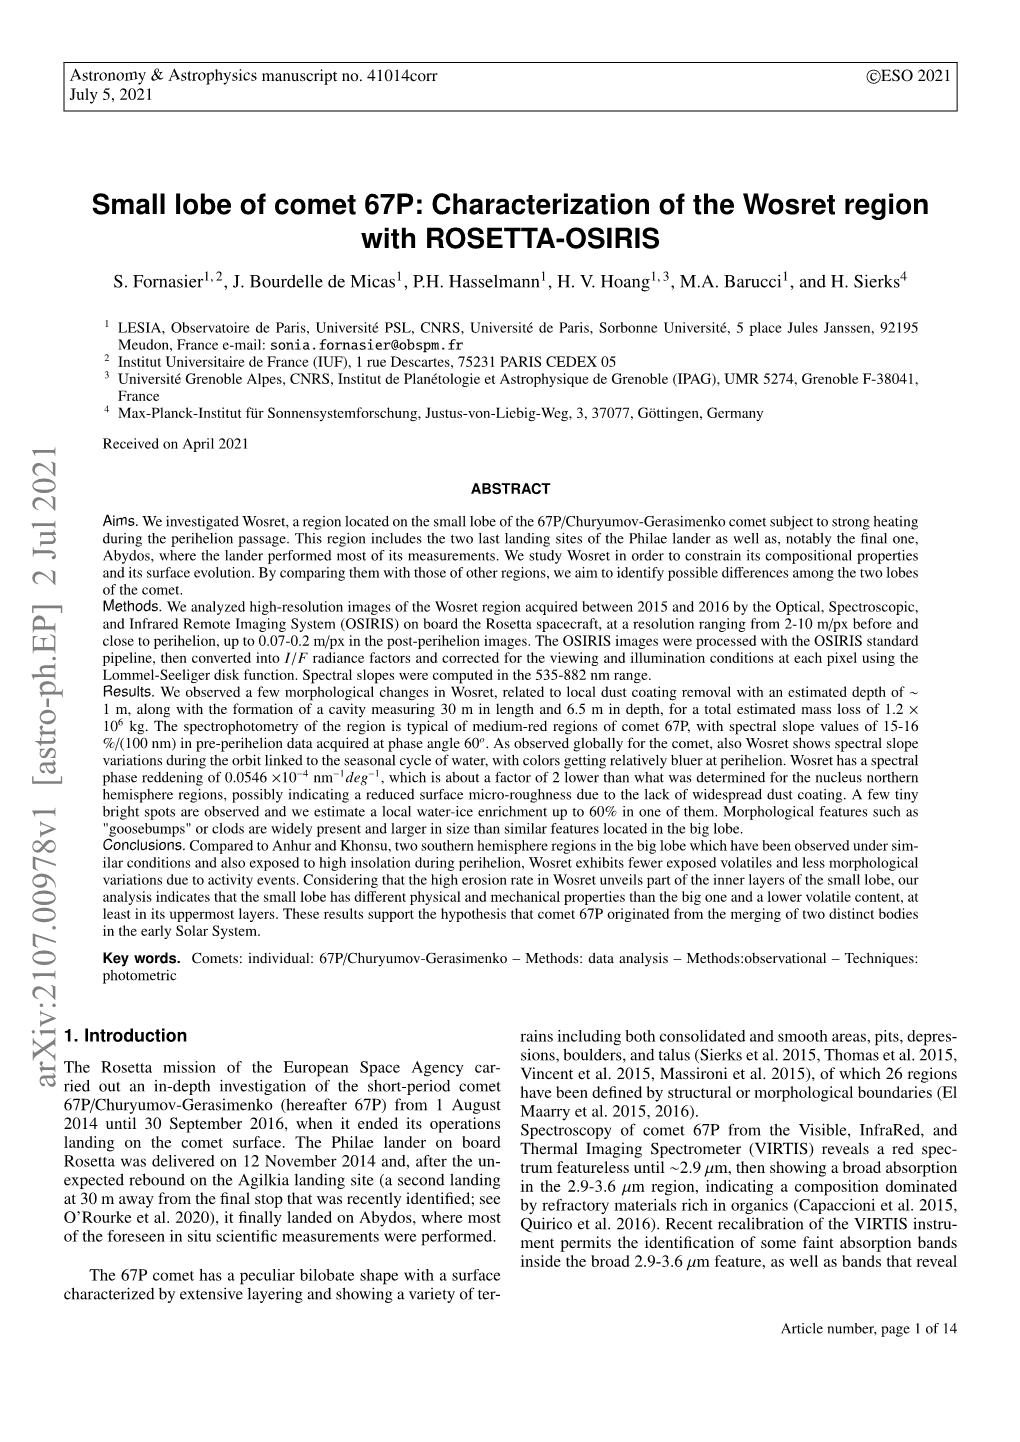 Small Lobe of Comet 67P: Characterization of the Wosret Region with ROSETTA-OSIRIS S